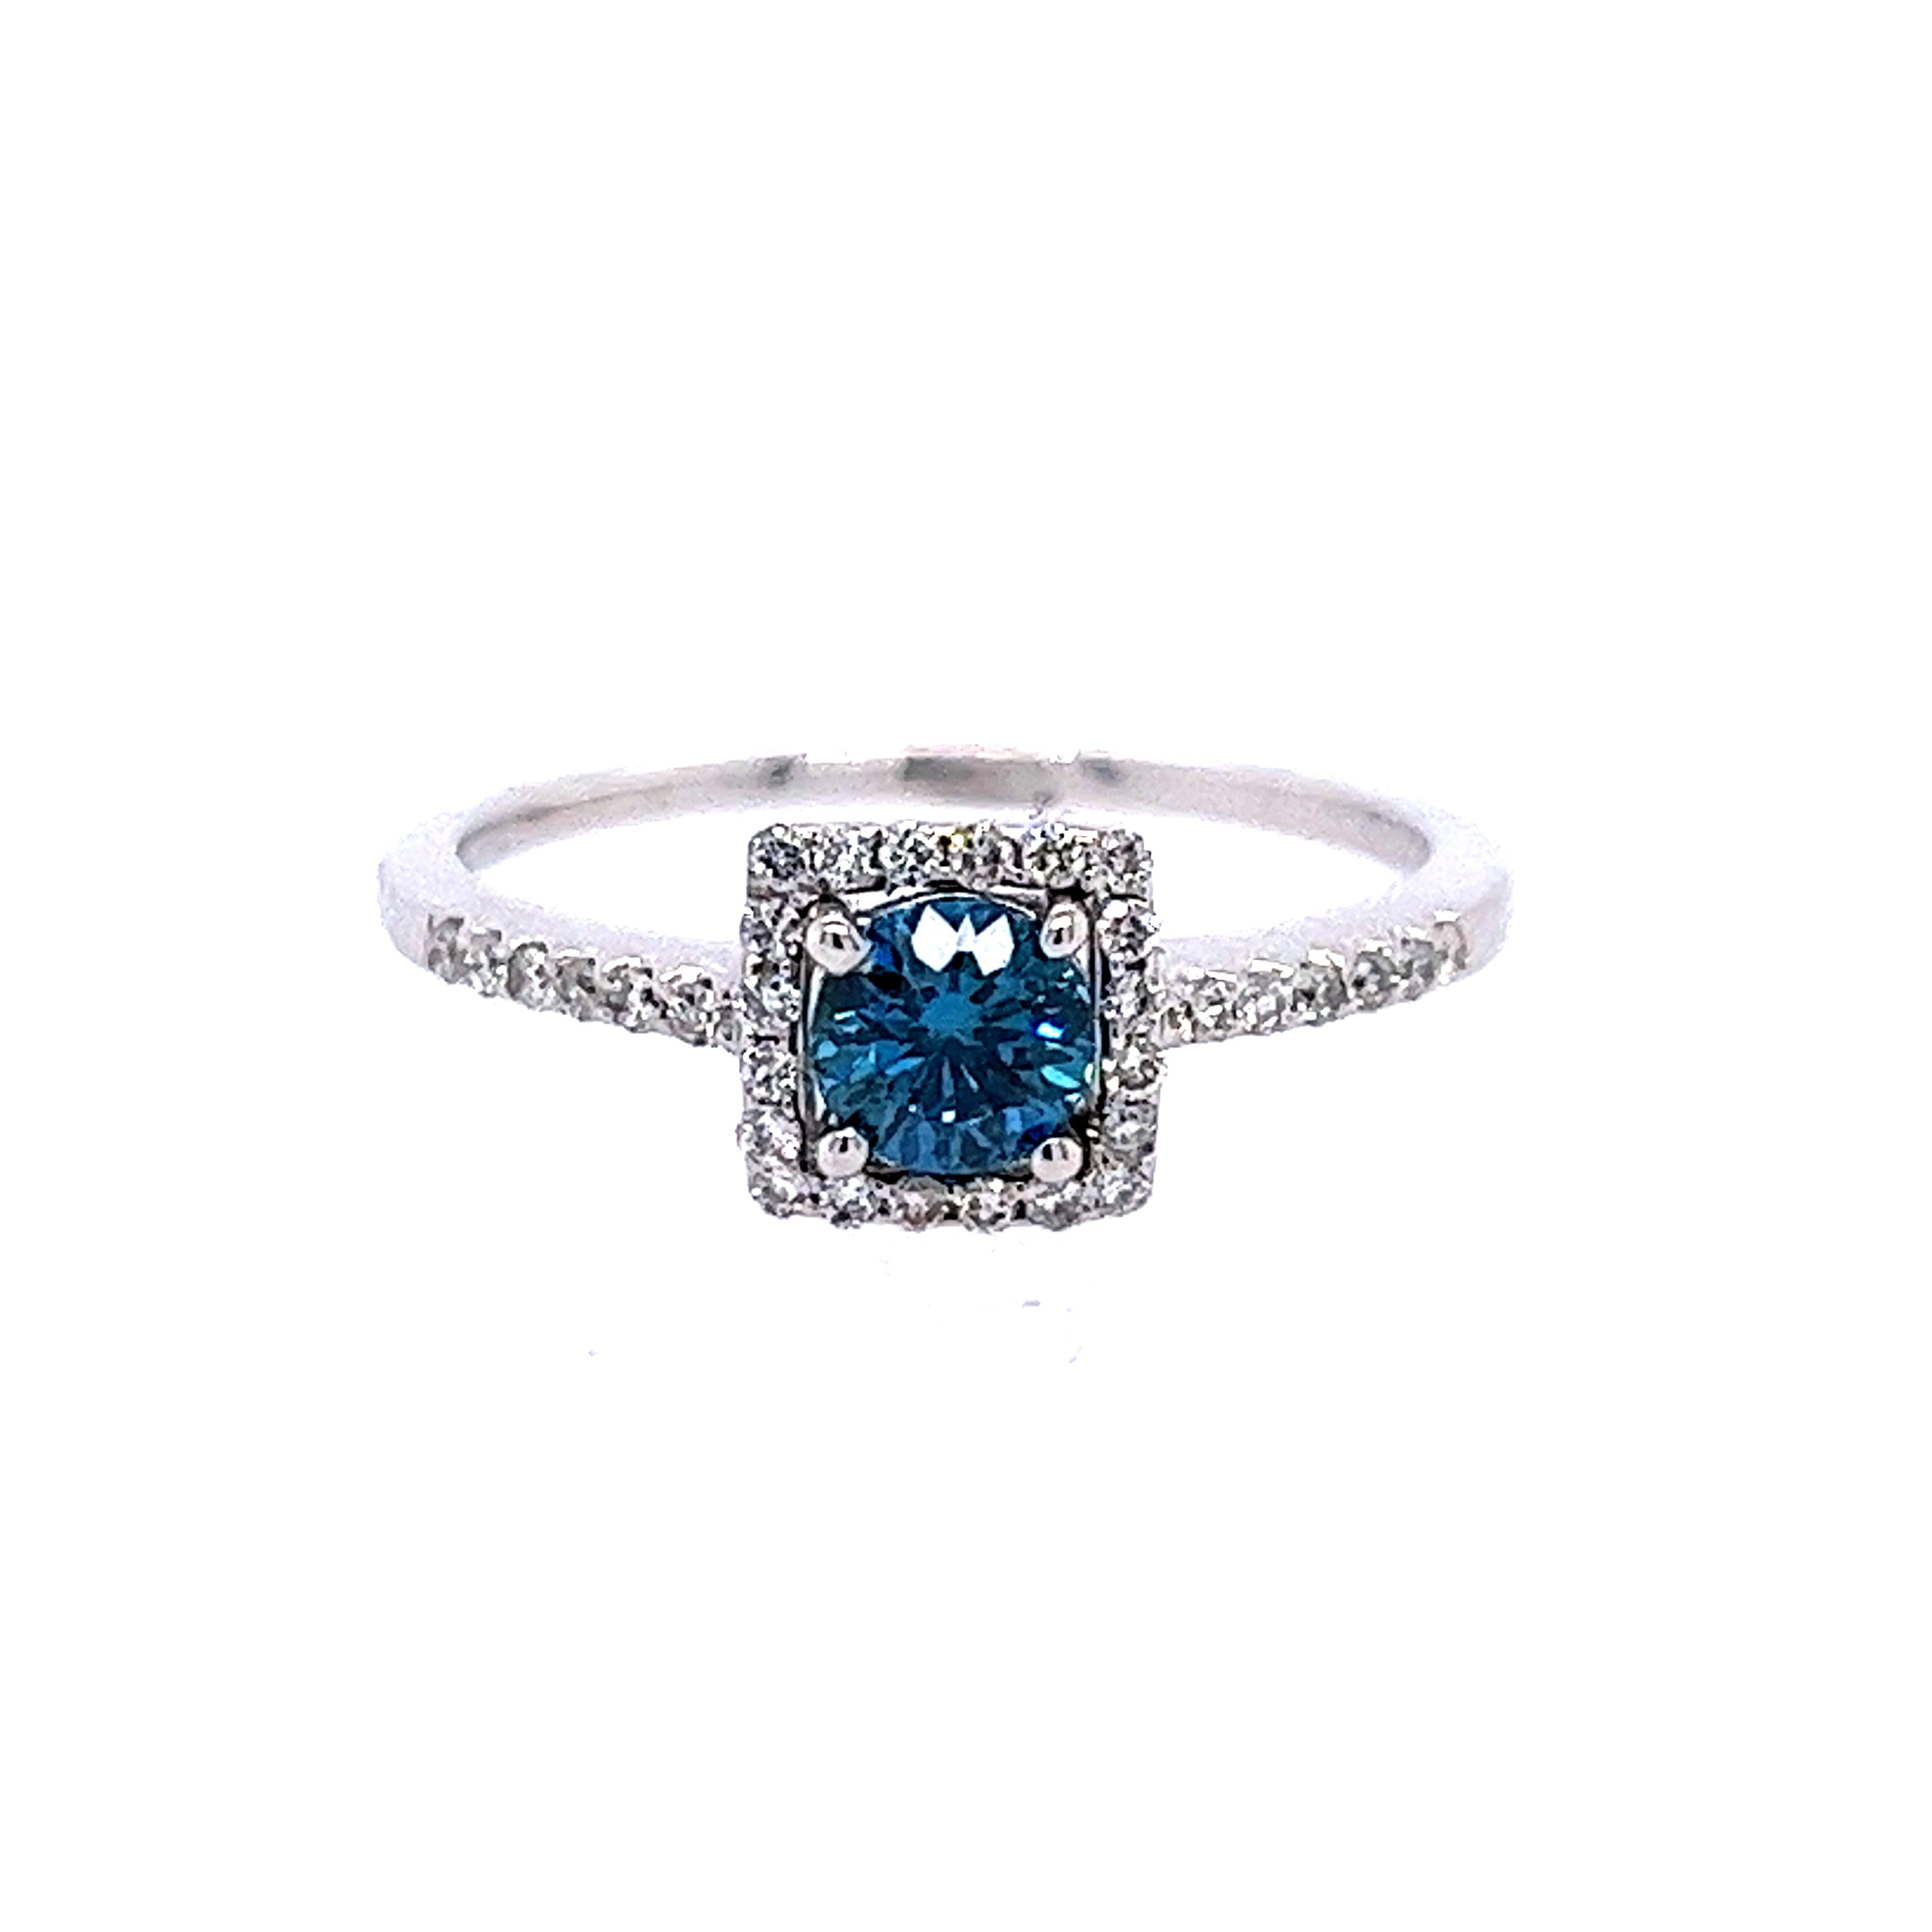 14k White Gold Halo Round Diamond Engagement Ring